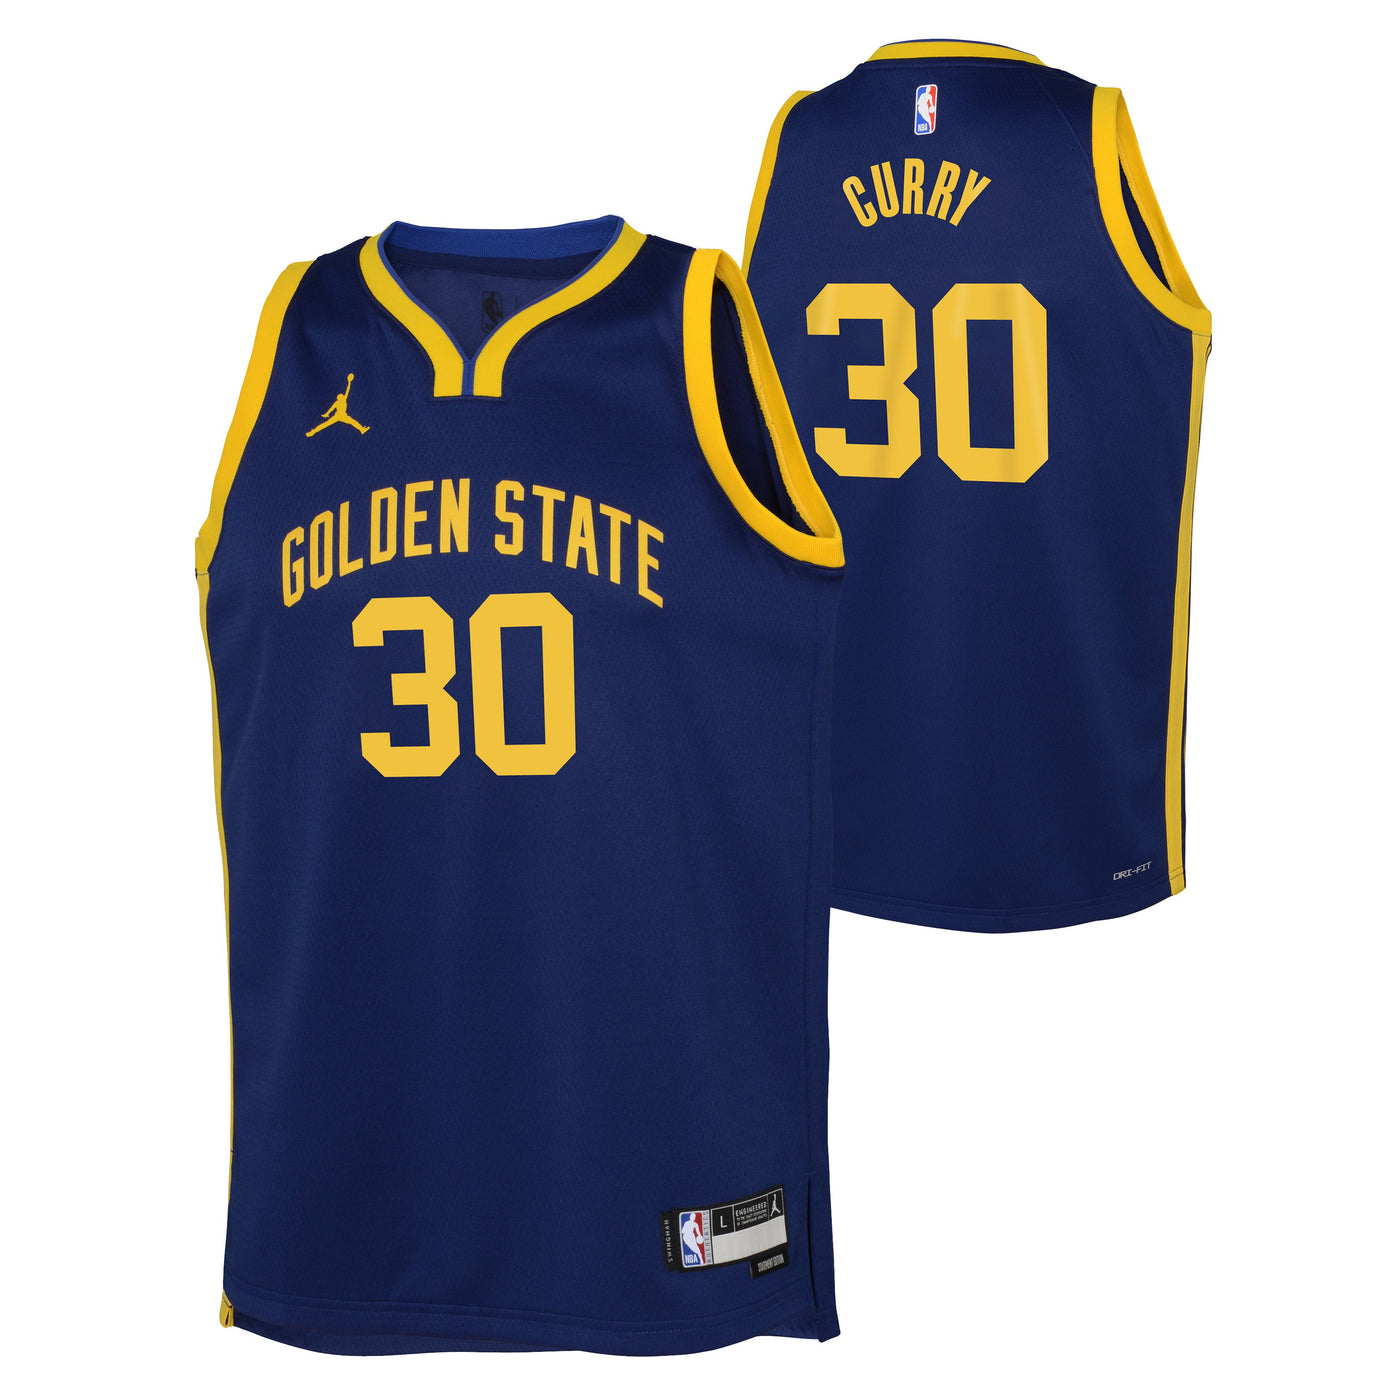 Boys Golden State Warriors Steph Curry Statement Swingman Replica Jersey